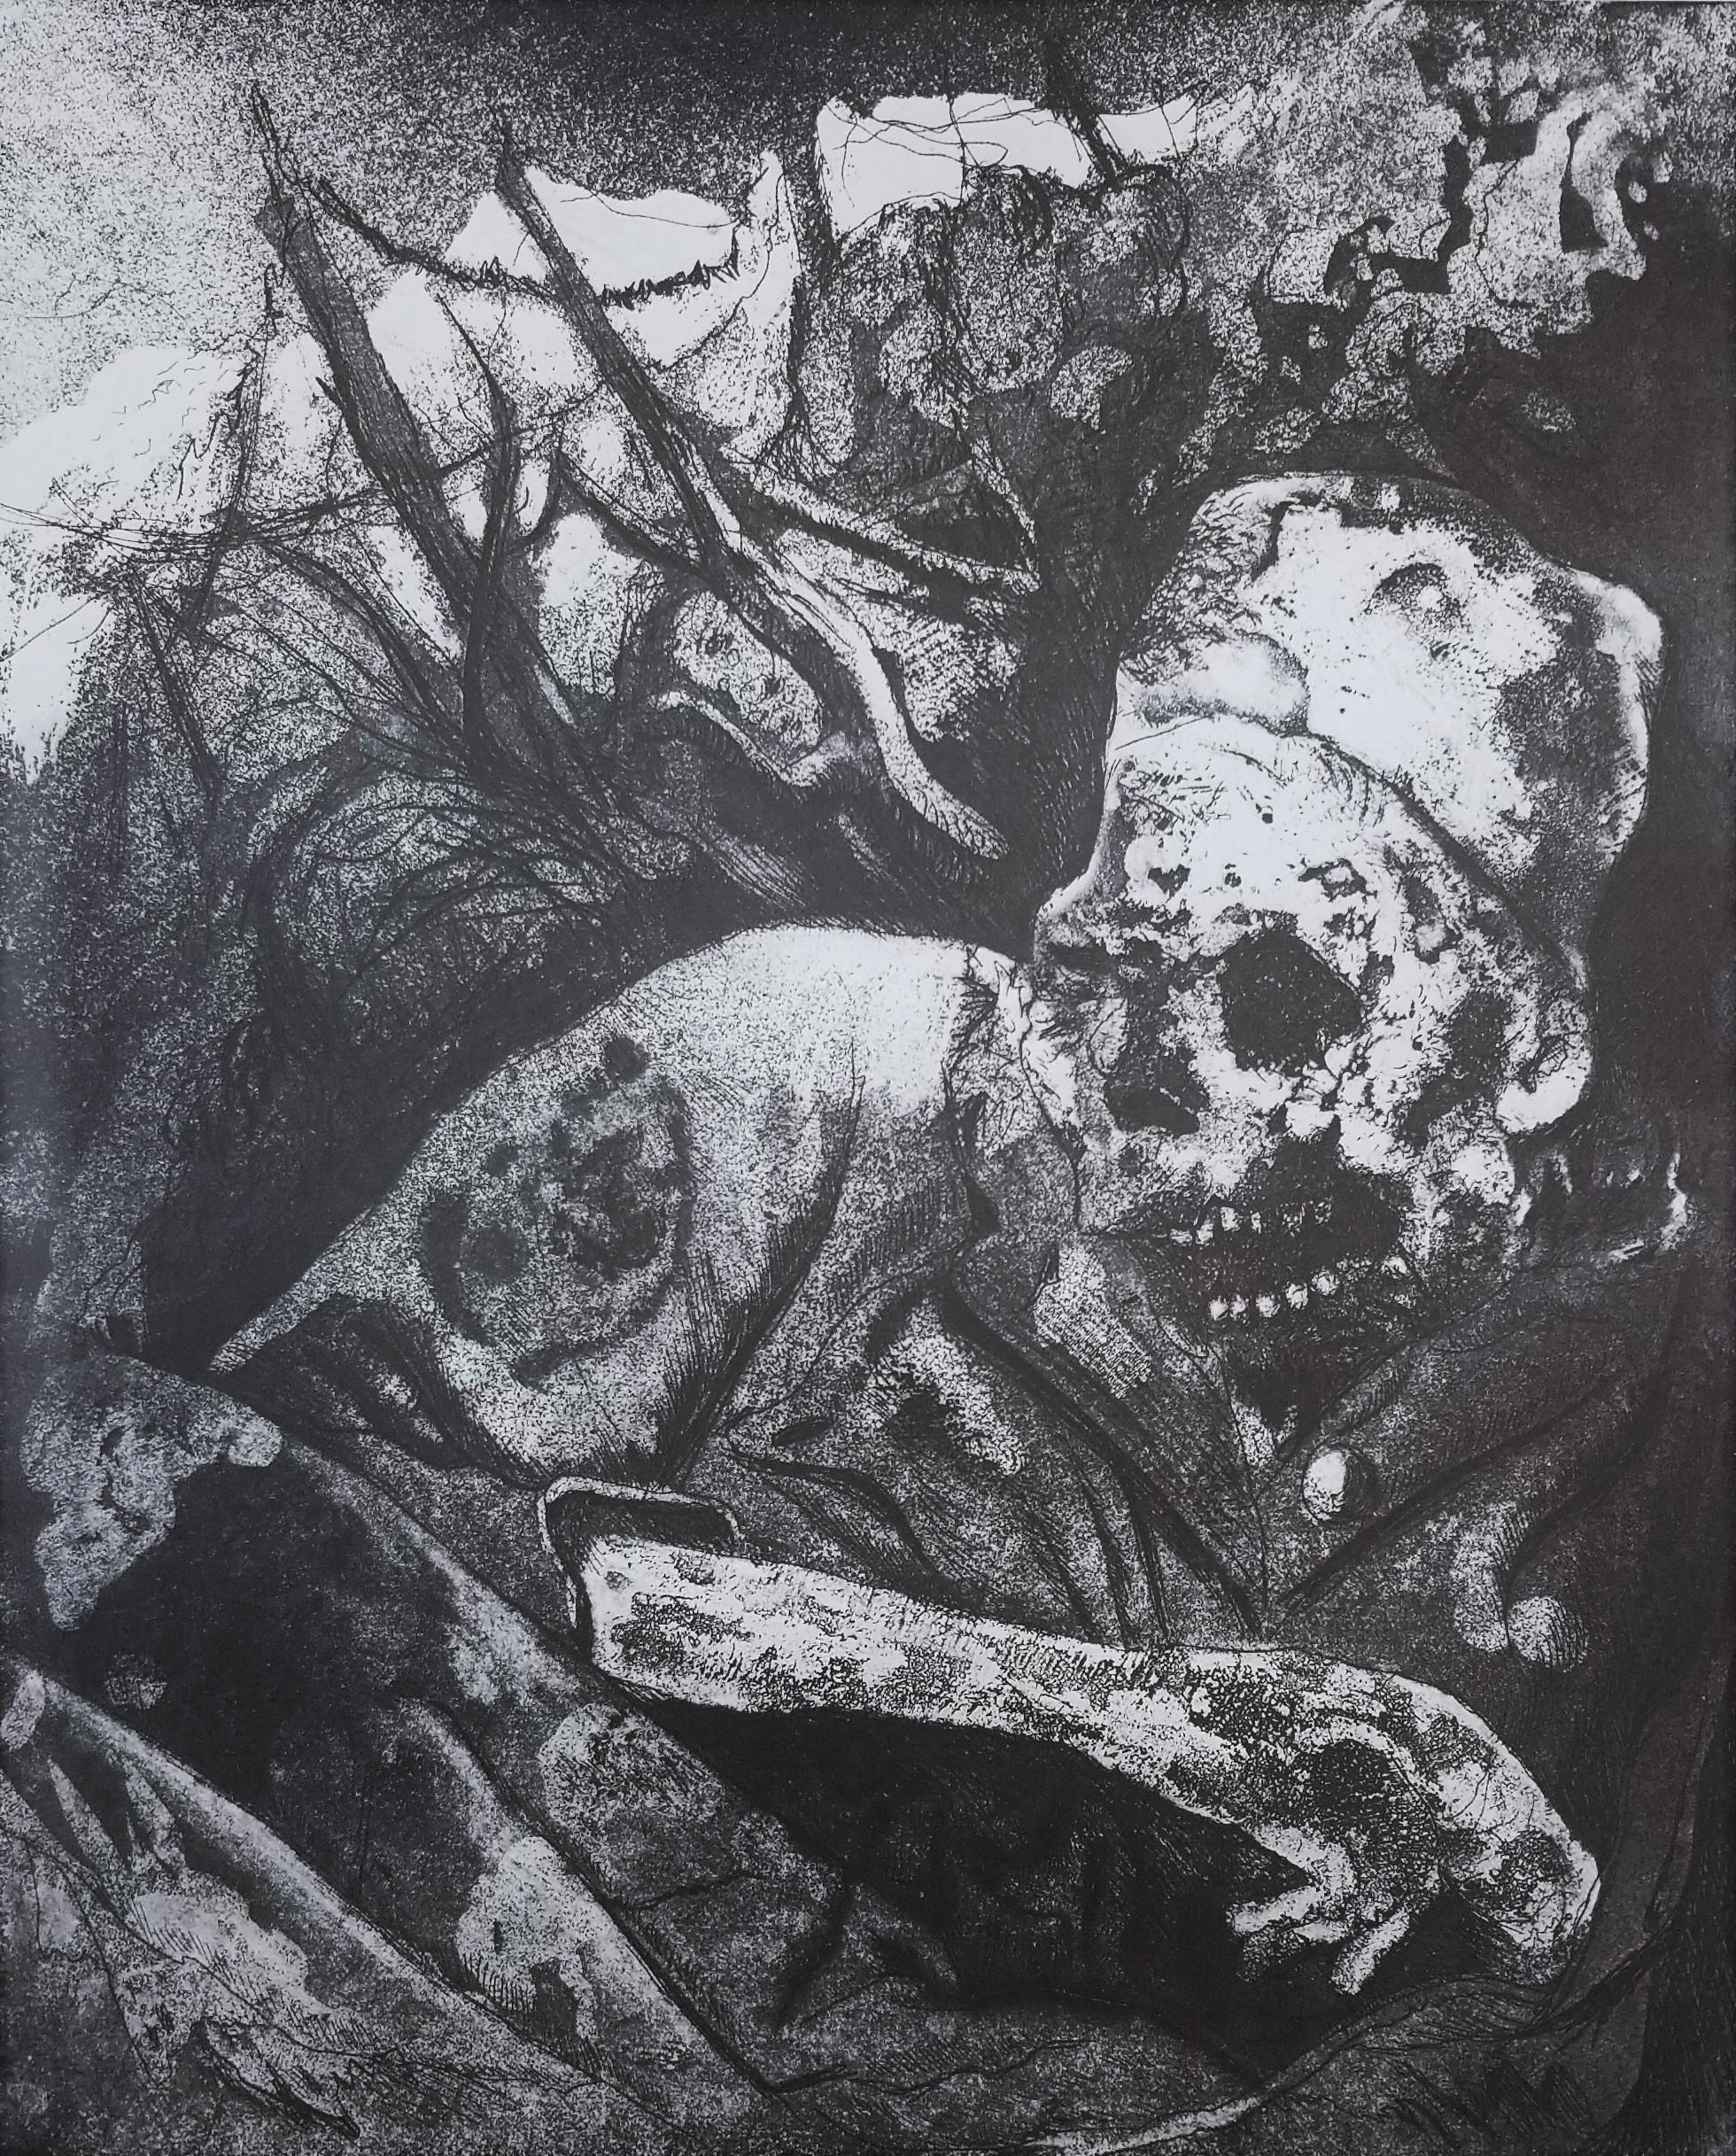 Städtische Galerie Albstadt (Corpse in Barbed Wire, Flanders) Poster - Print by Otto Dix